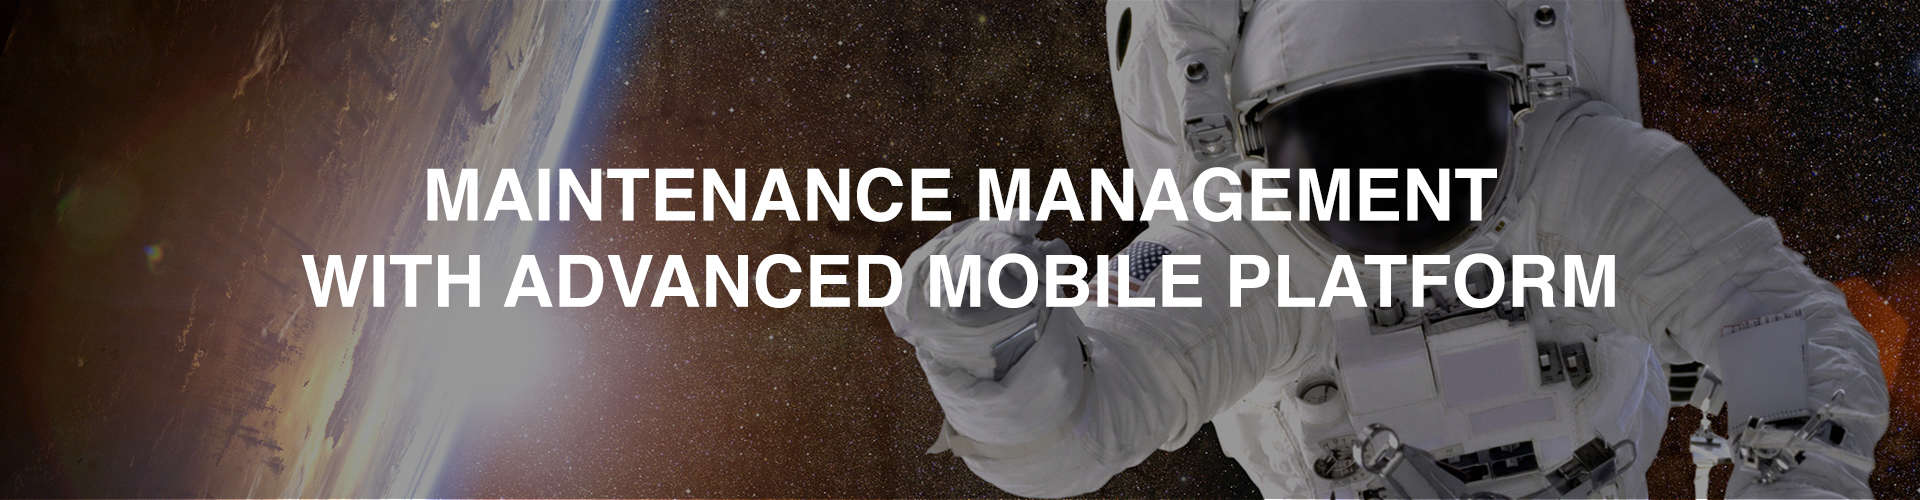 Maintenance Management With Advanced Mobile Platform